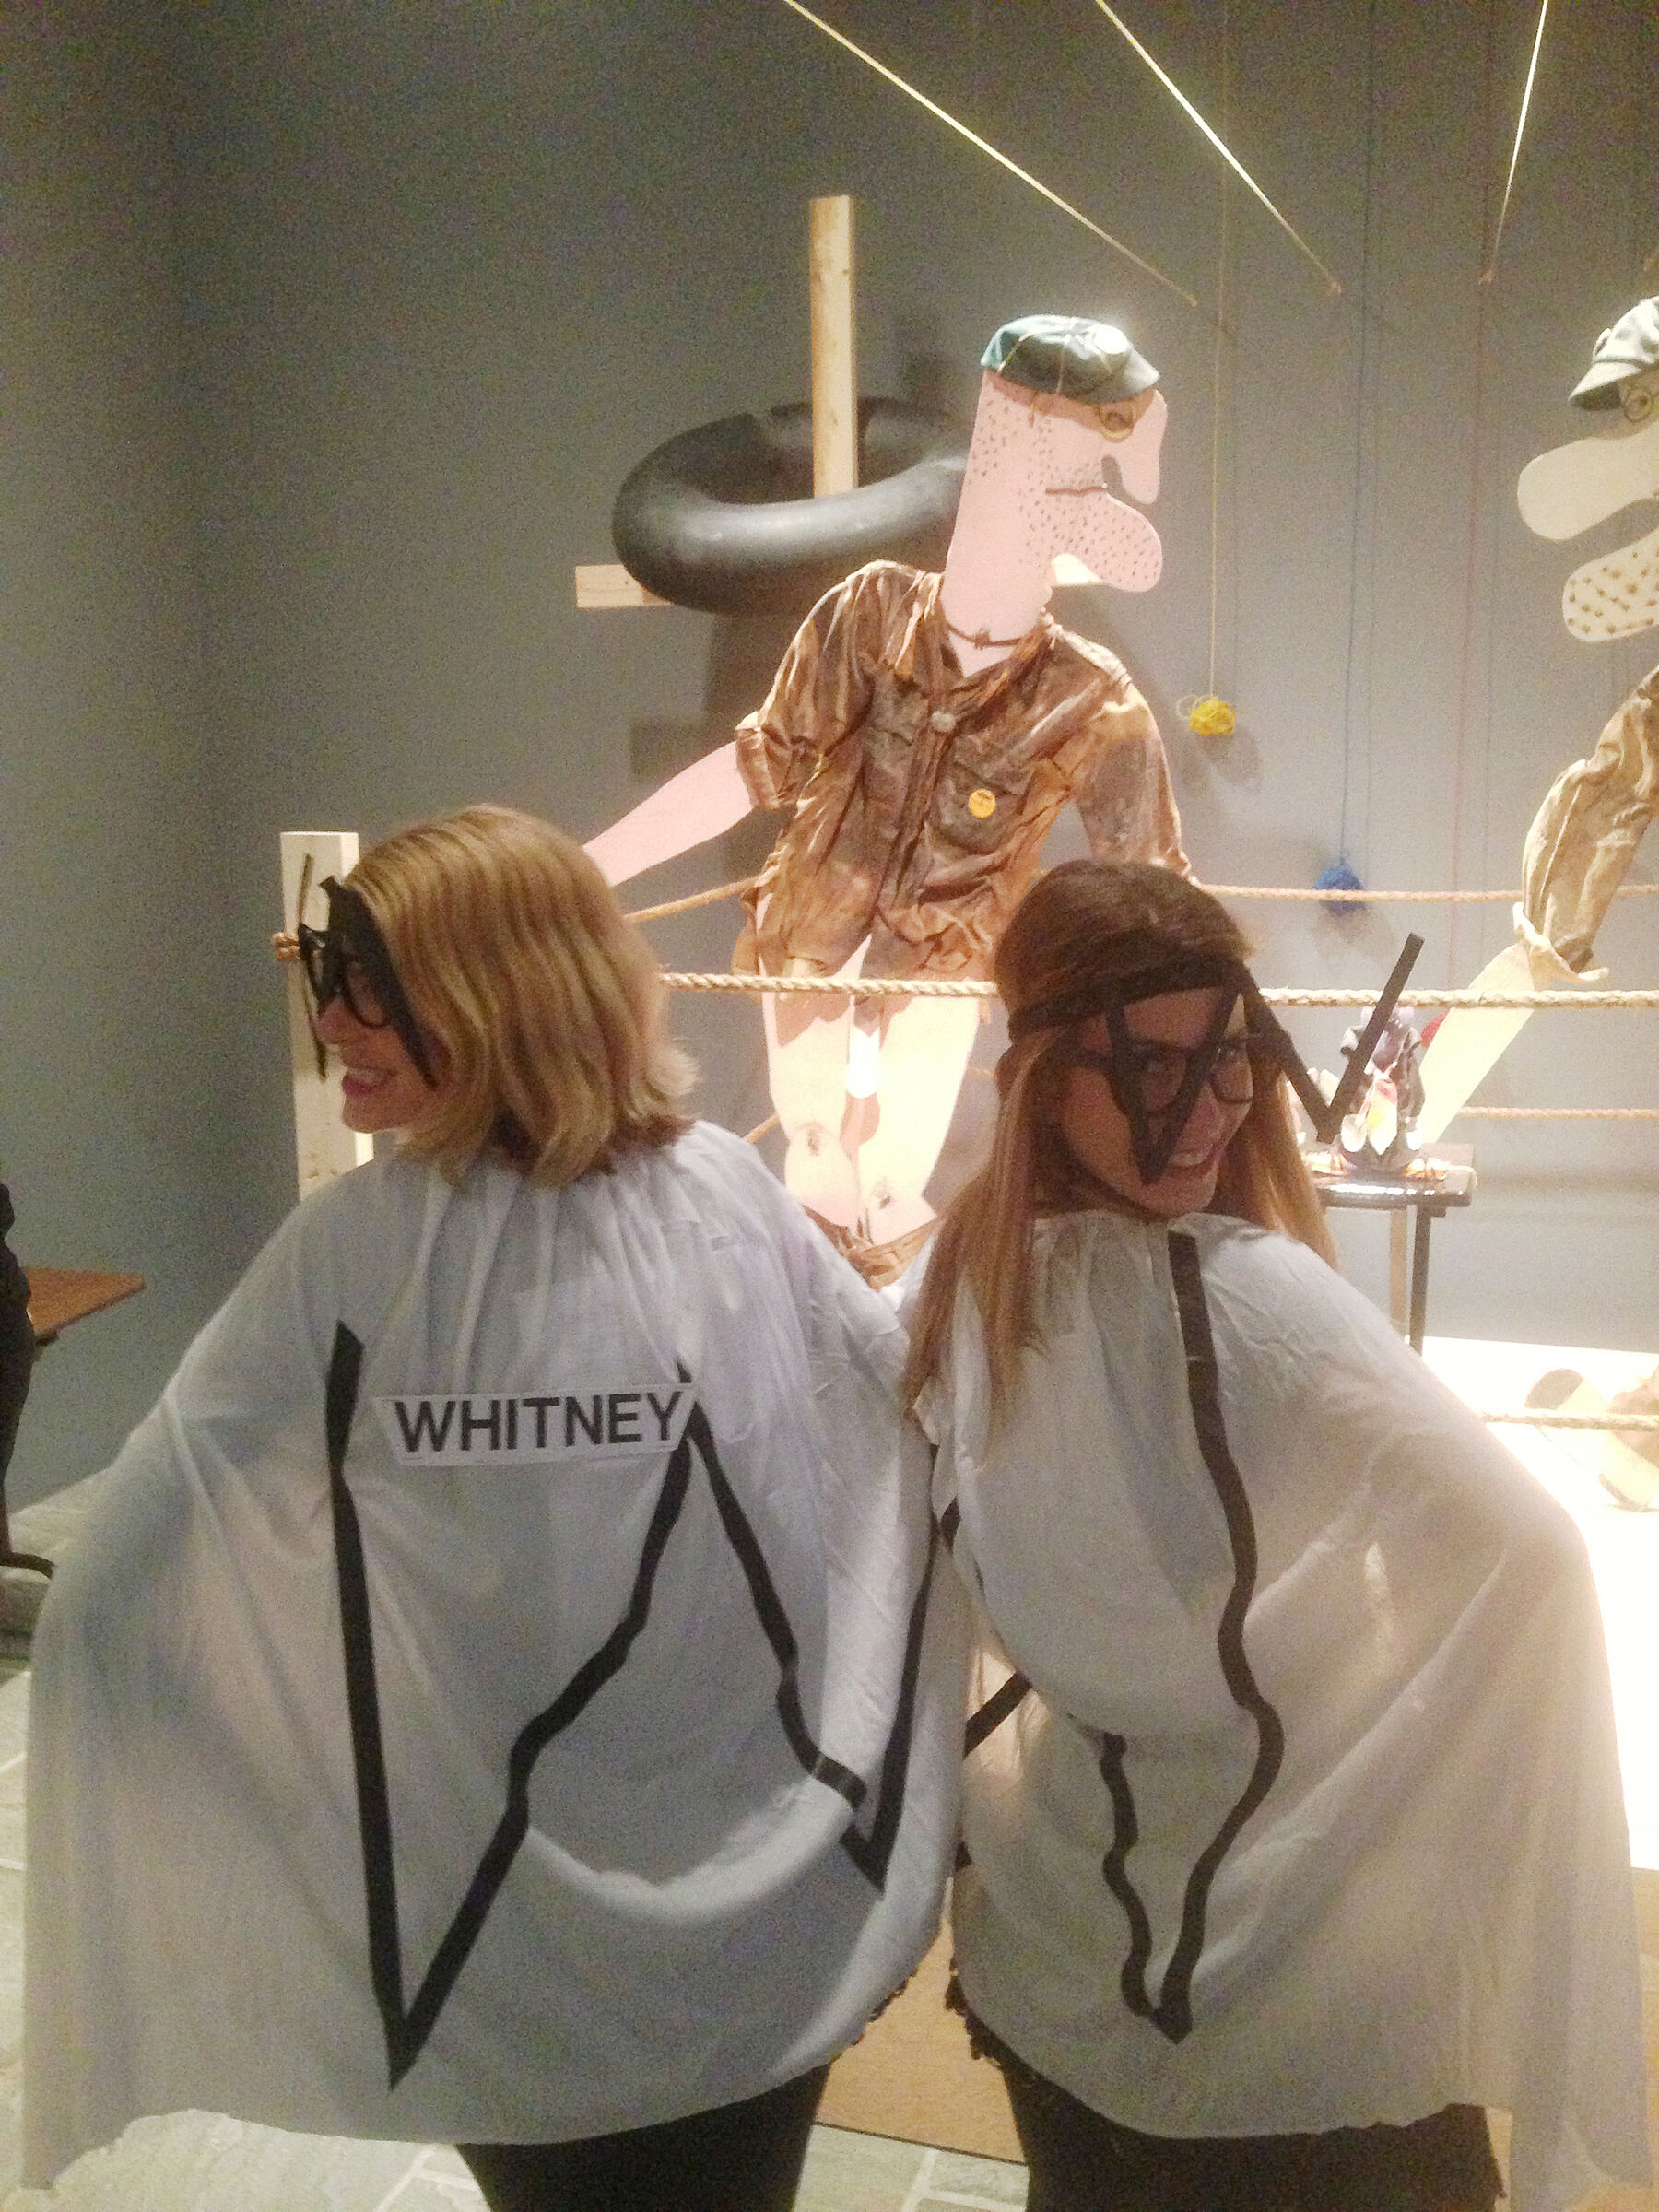 Two museum staff members dressed in costumer